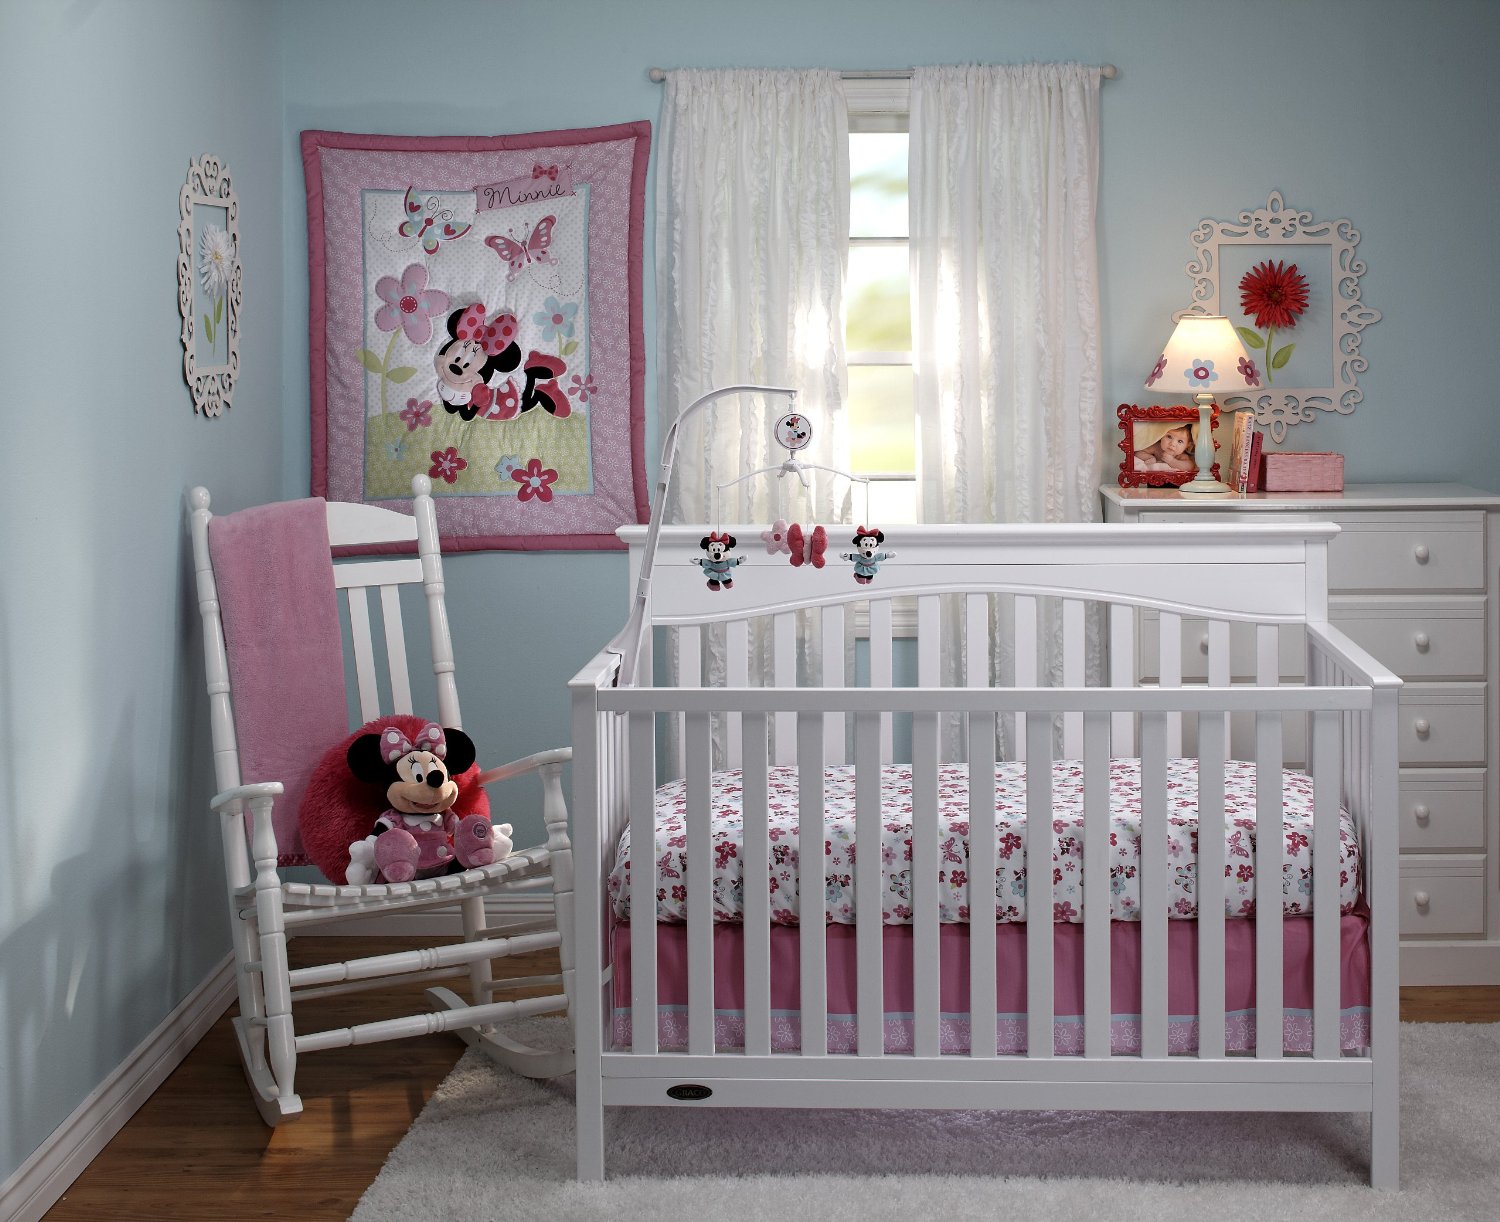 minnie mouse baby crib bedding set